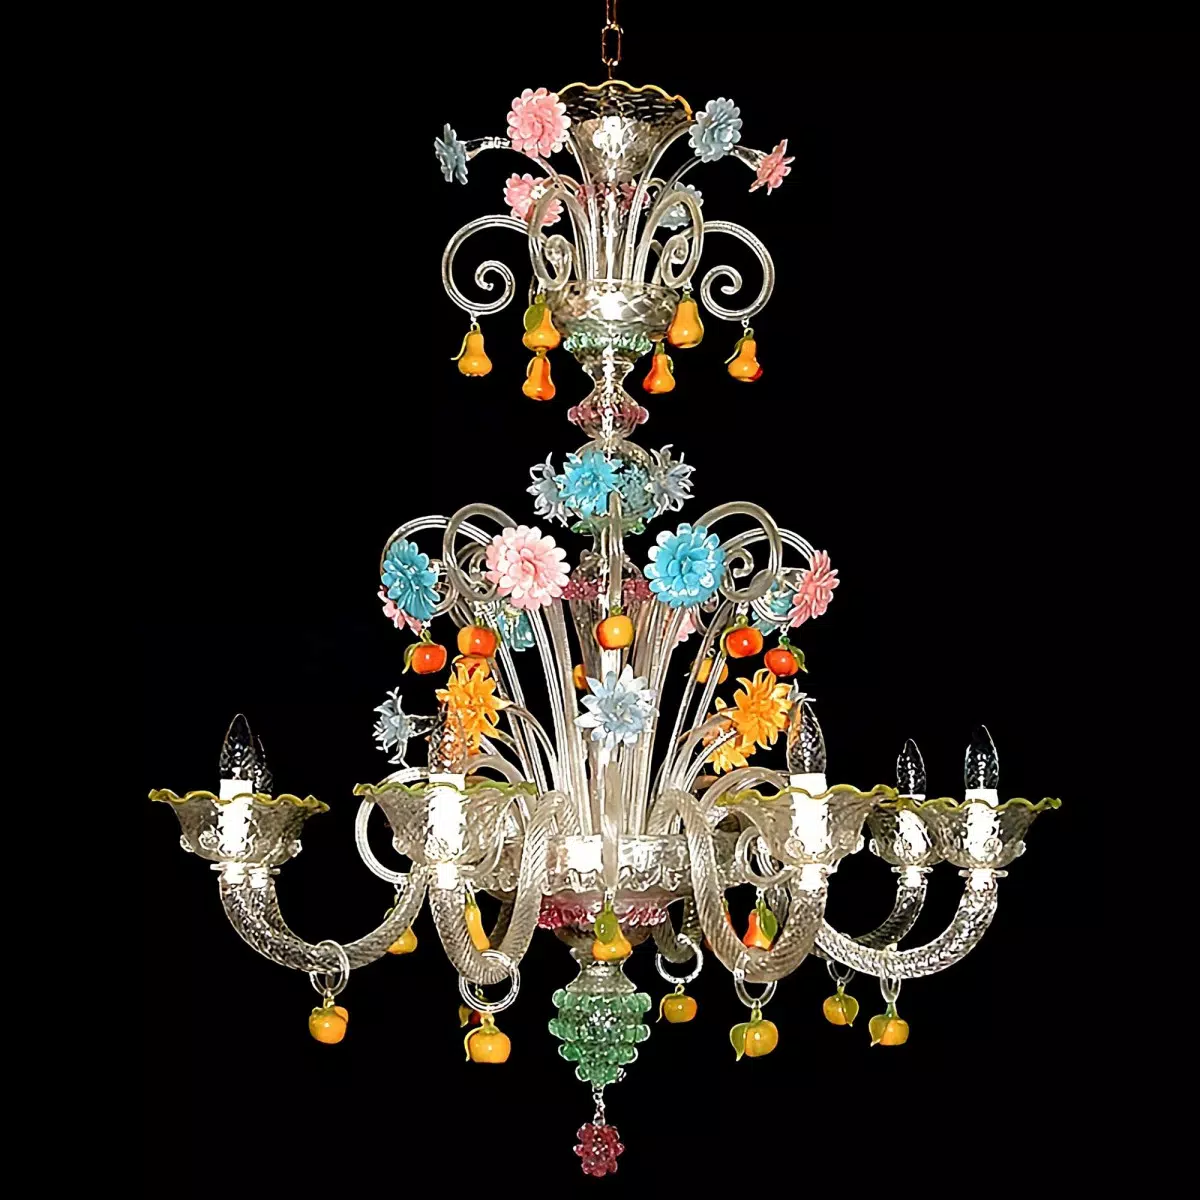 Tripudio 8 lights Murano glass chandelier